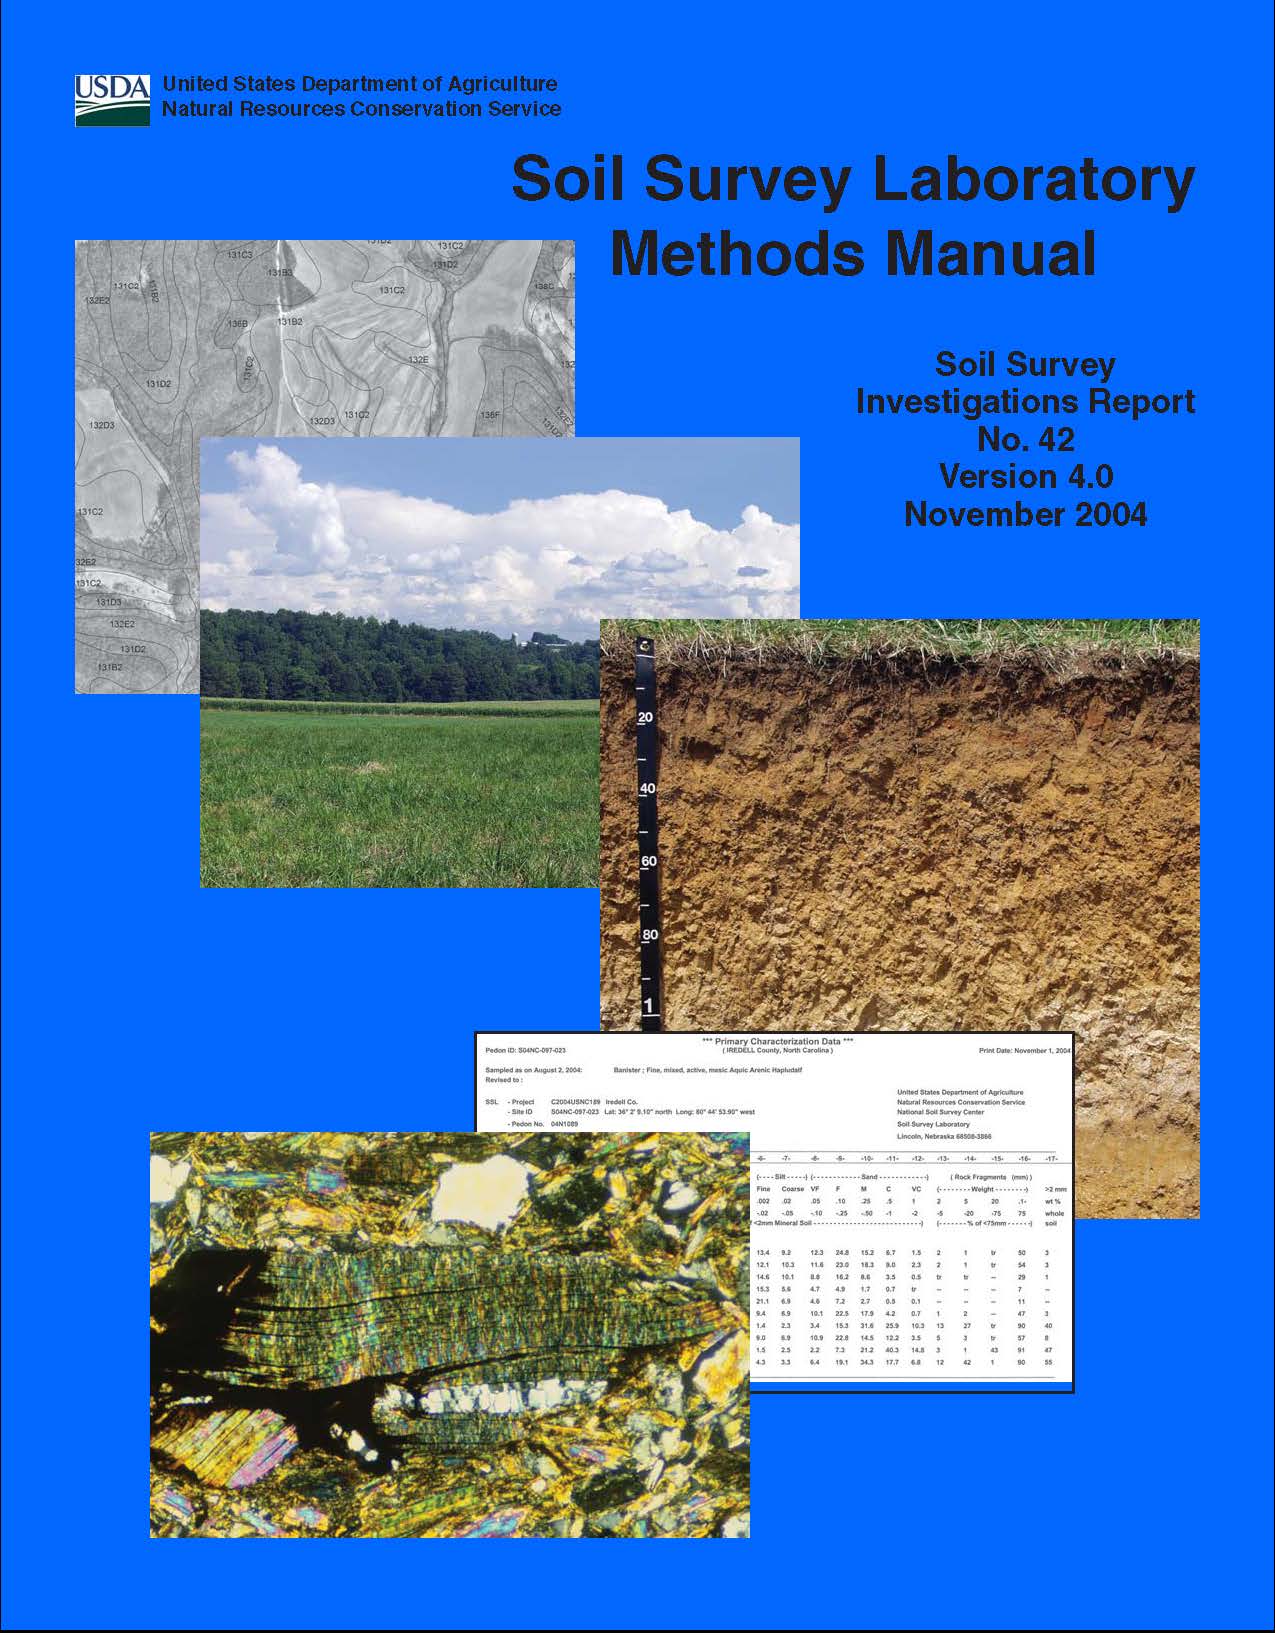 Soil-Soil Survey Laboratory Methods manual 4.0